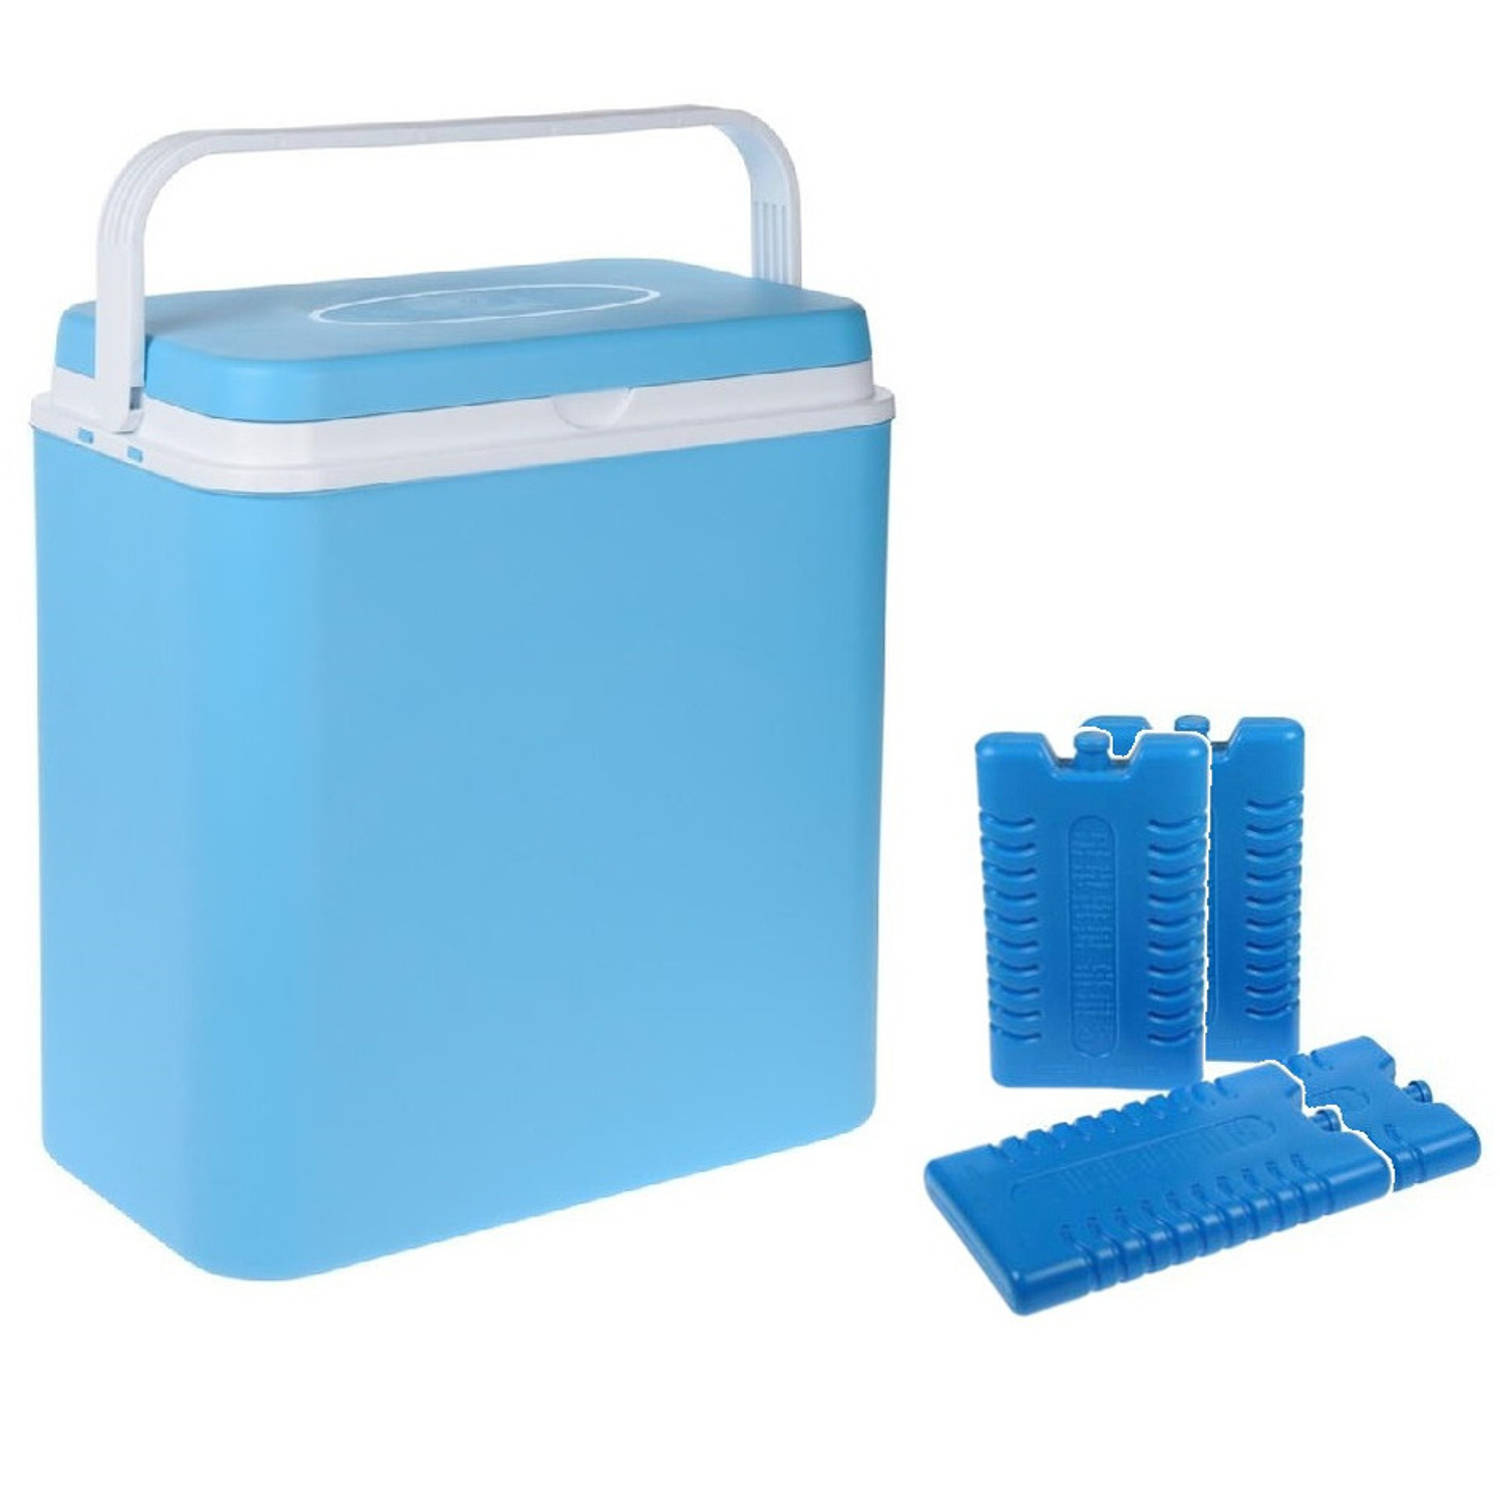 Koelbox lichtblauw 24 liter 39 x 25 x 38 cm incl. 4 koelelementen - Koelboxen